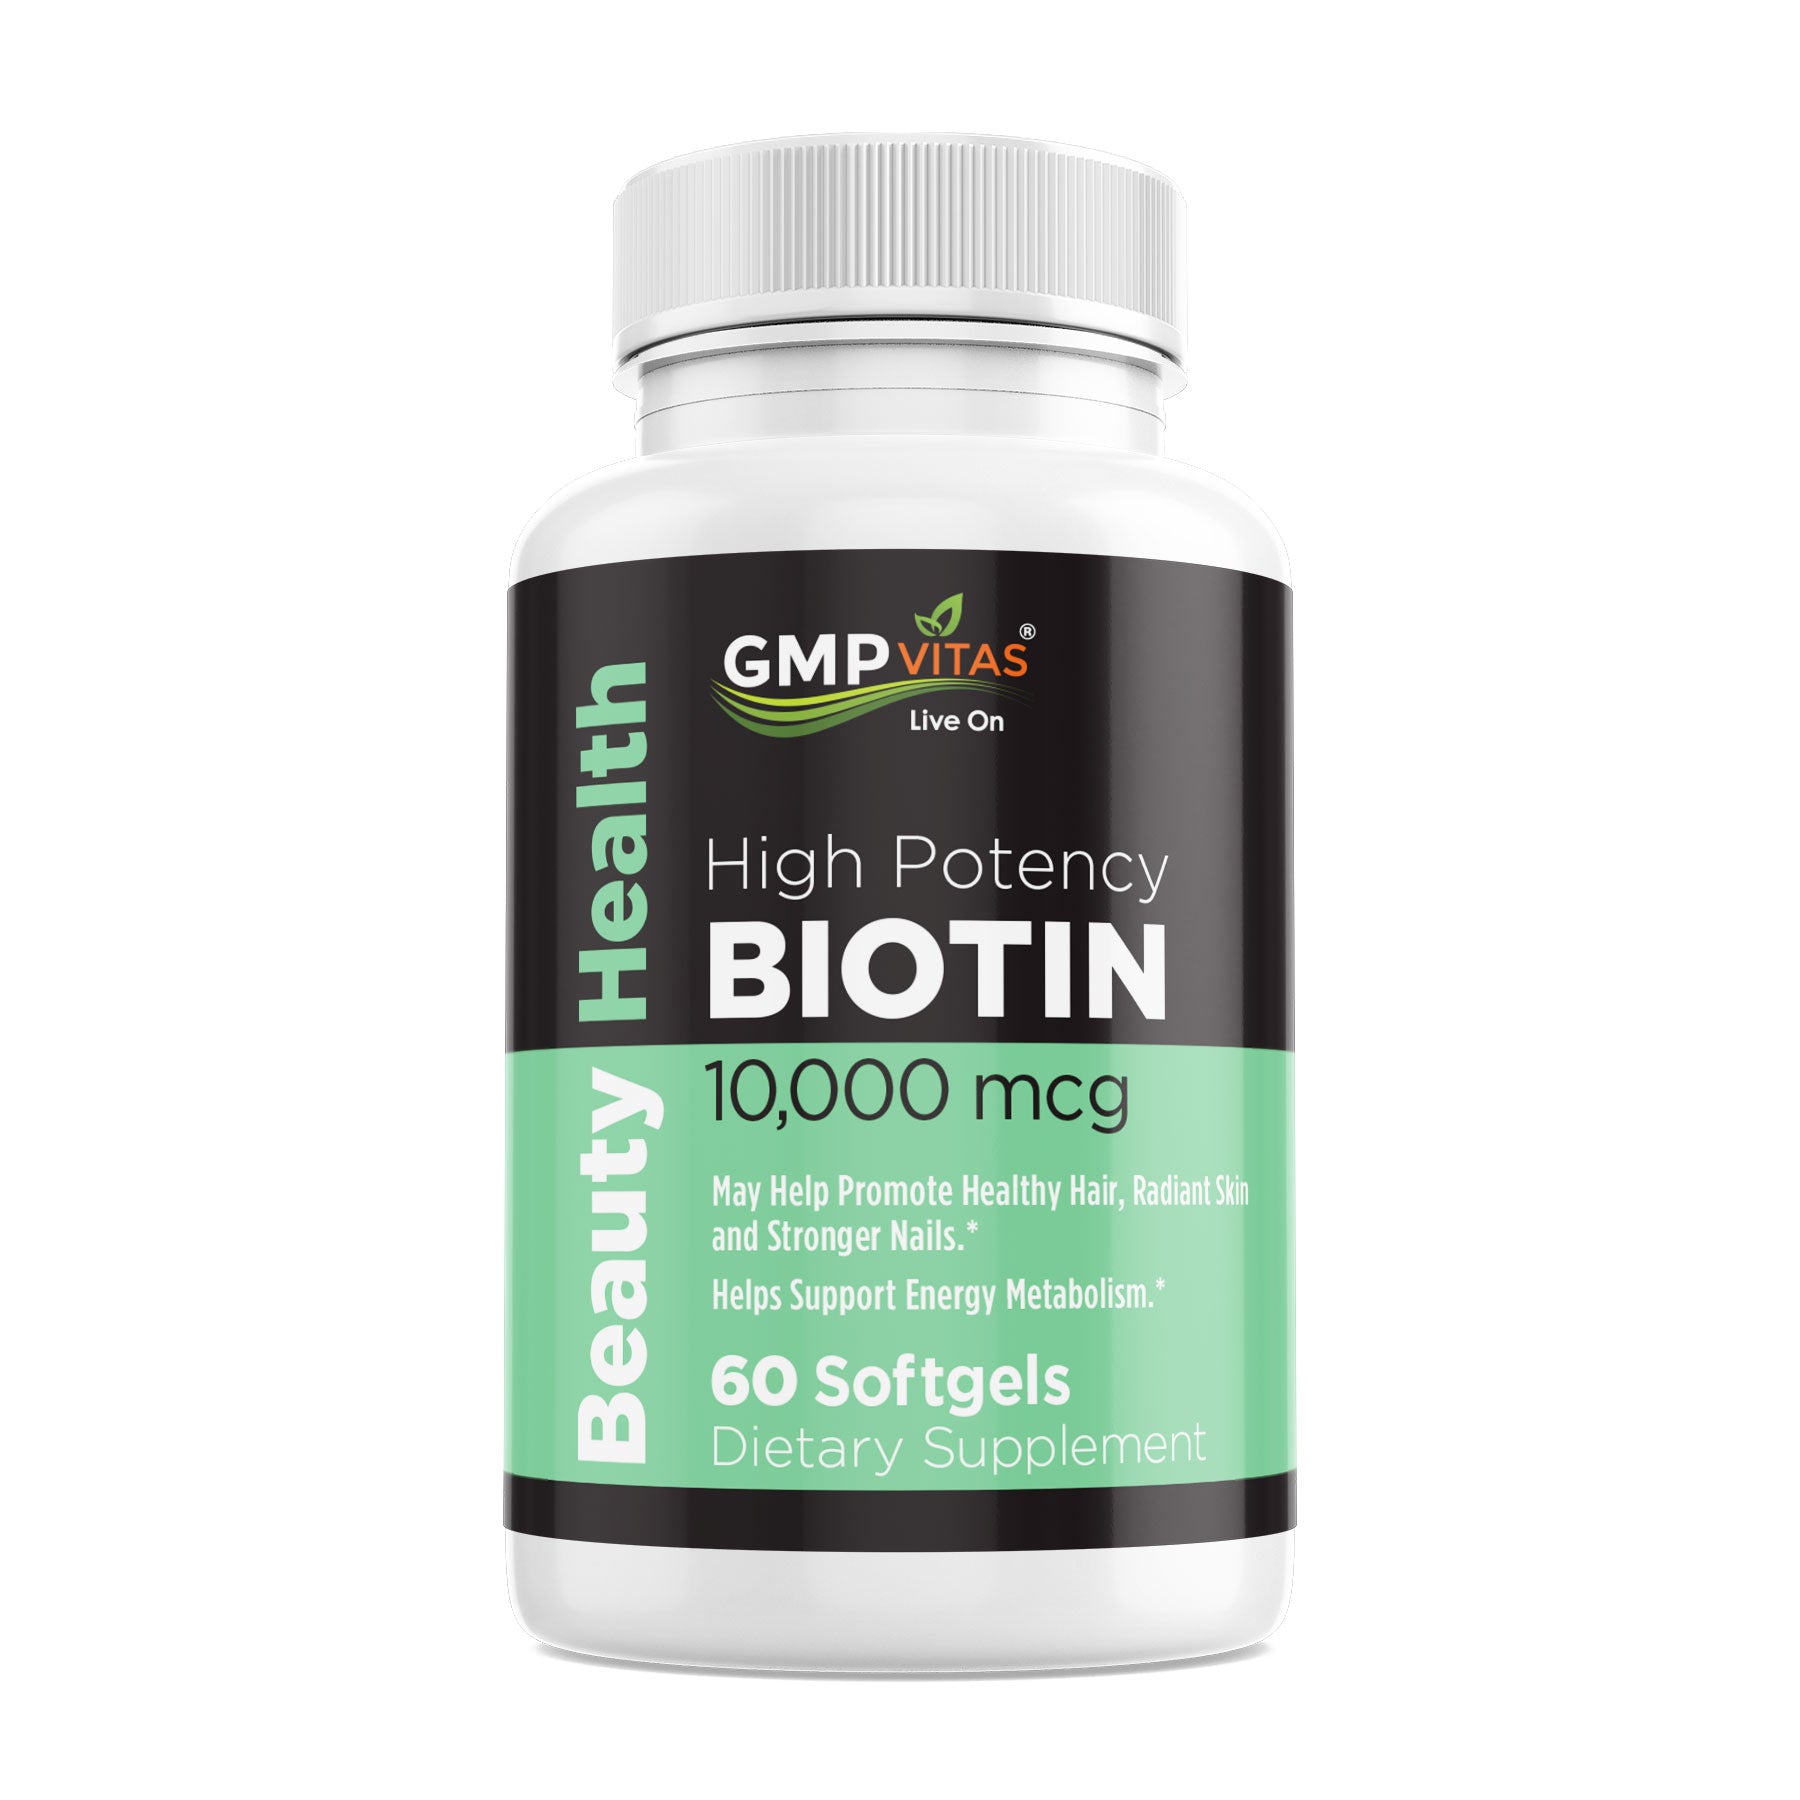 1 month of growth on Biotin : r/RedditLaqueristas